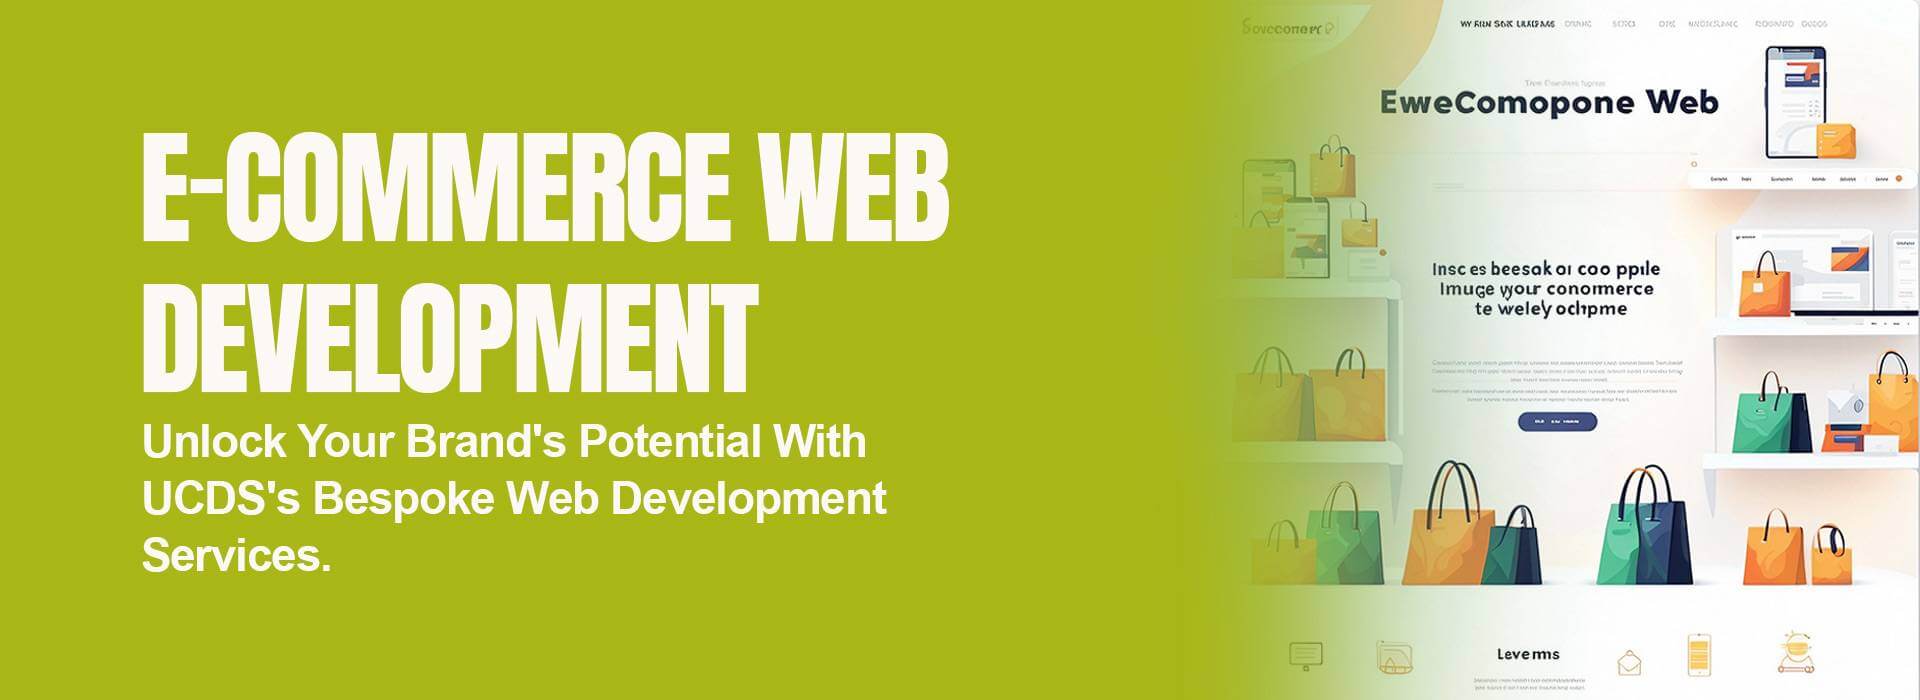 E-commerce-web-development